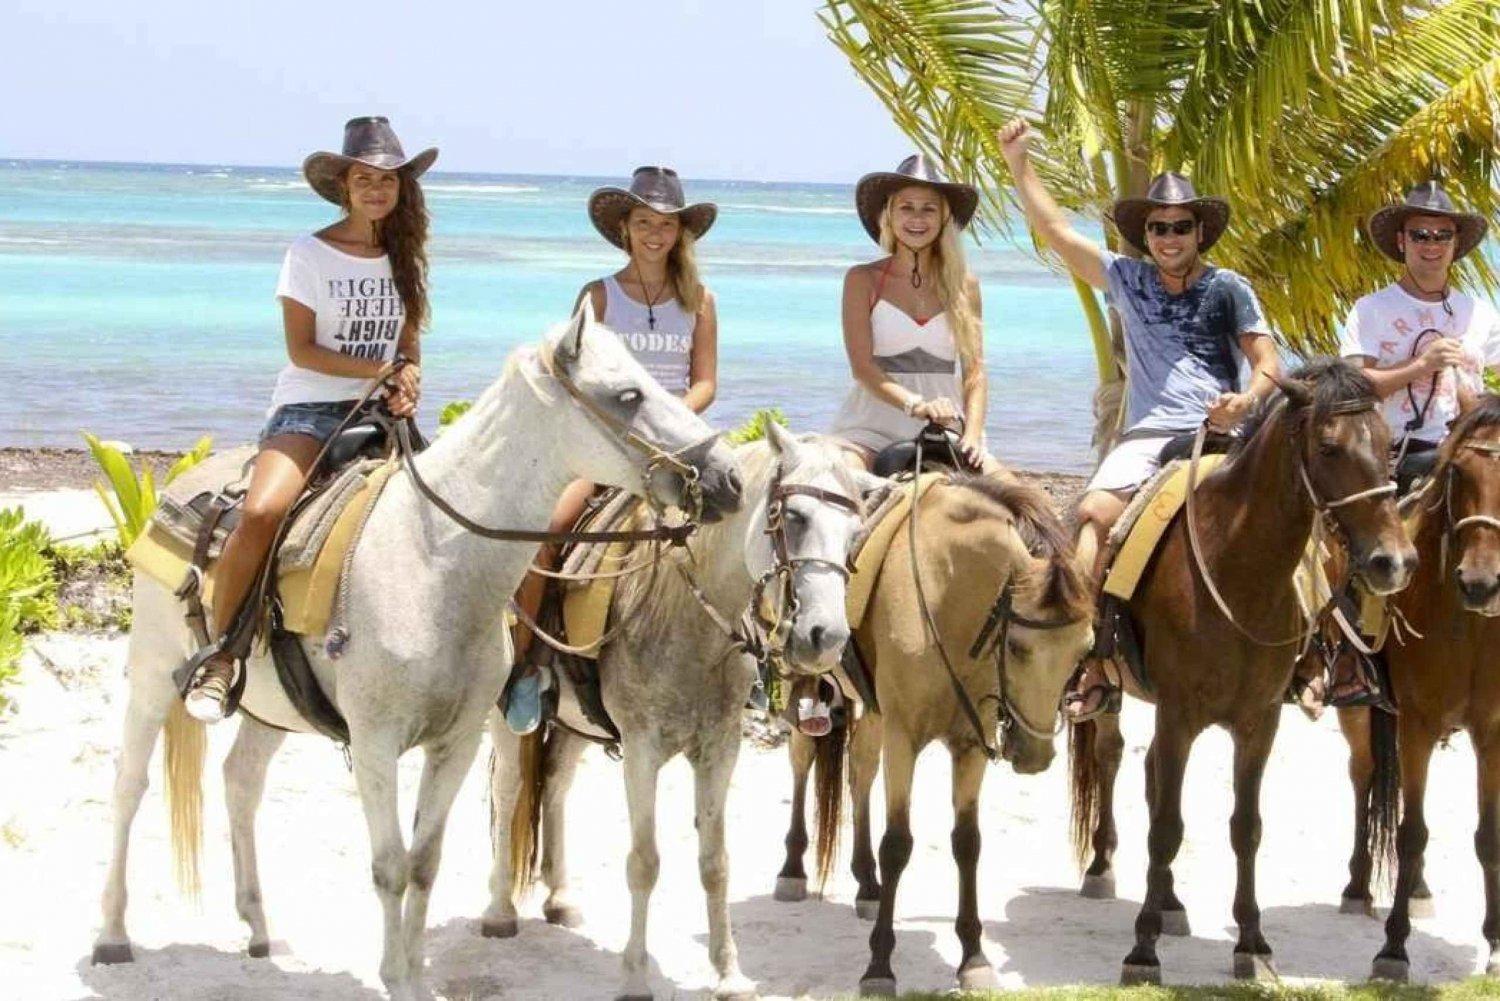 Punta Cana: Horseback Riding Through the Beautiful Beaches